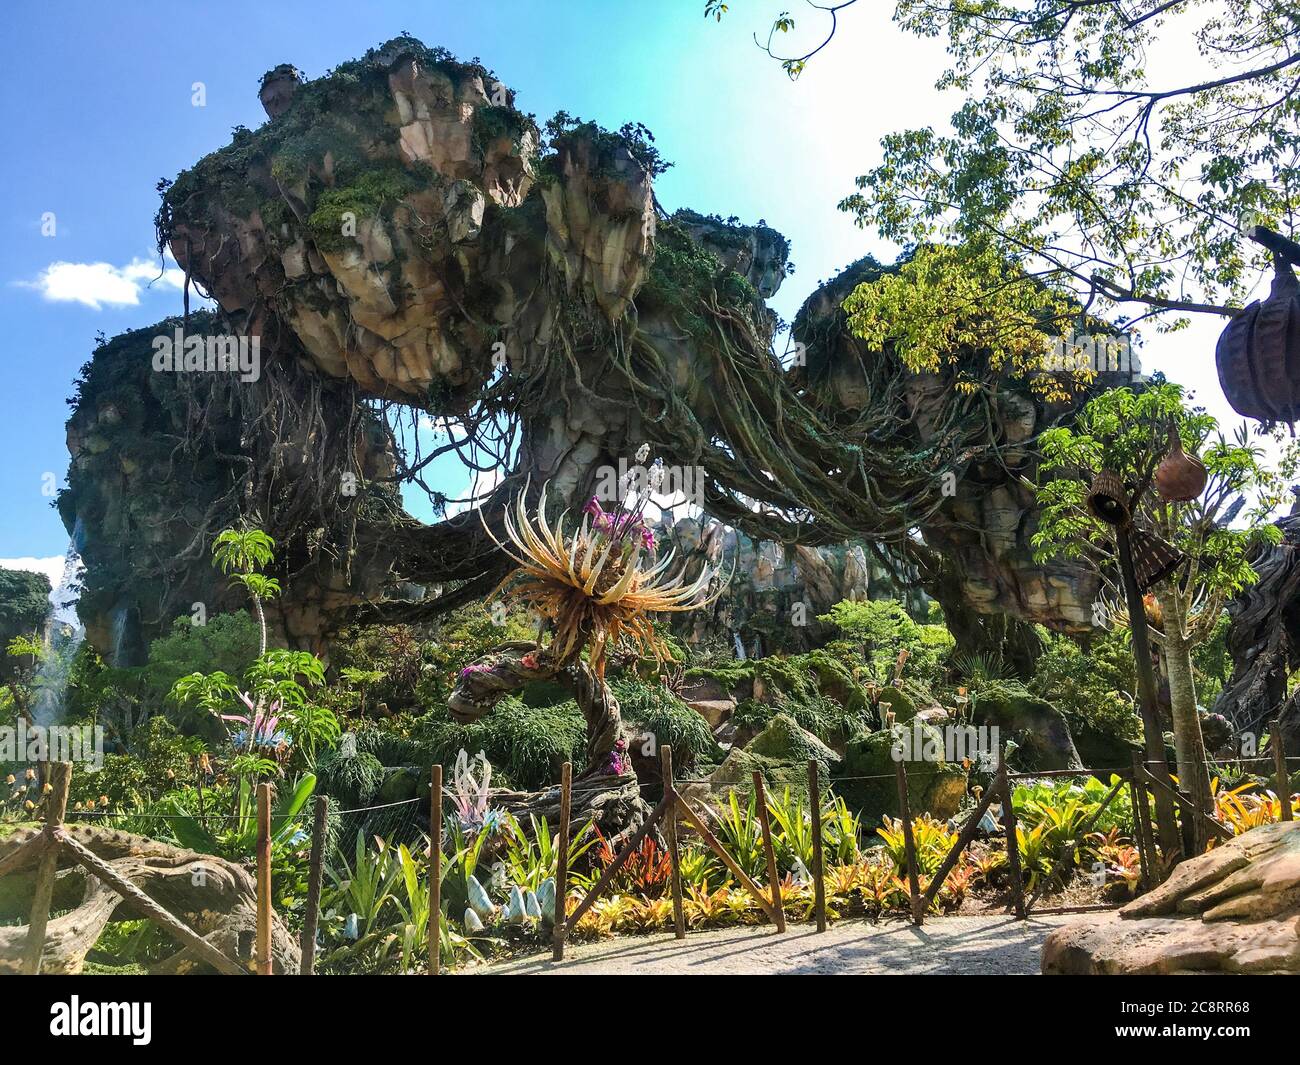 ORLANDO, FLORIDA – May 15th, 2017 – The Floating Mountains in Pandora (Avatar) in Disney's Animal Kingdom in Walt Disney World Stock Photo